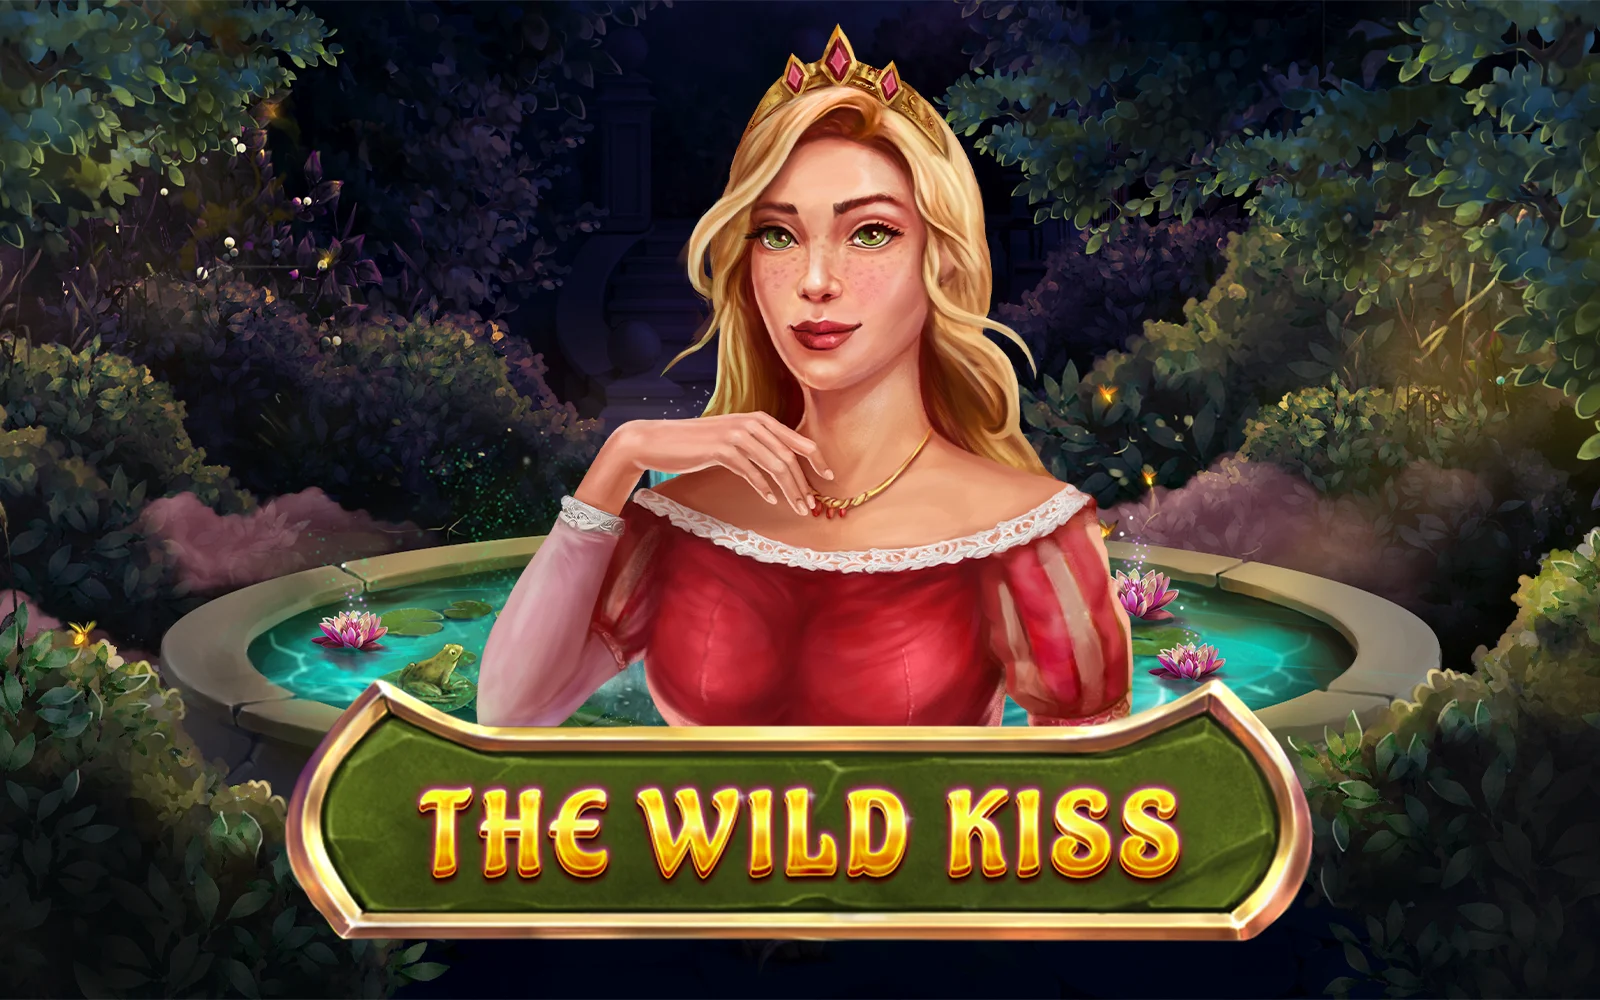 Play The Wild Kiss on Starcasino.be online casino